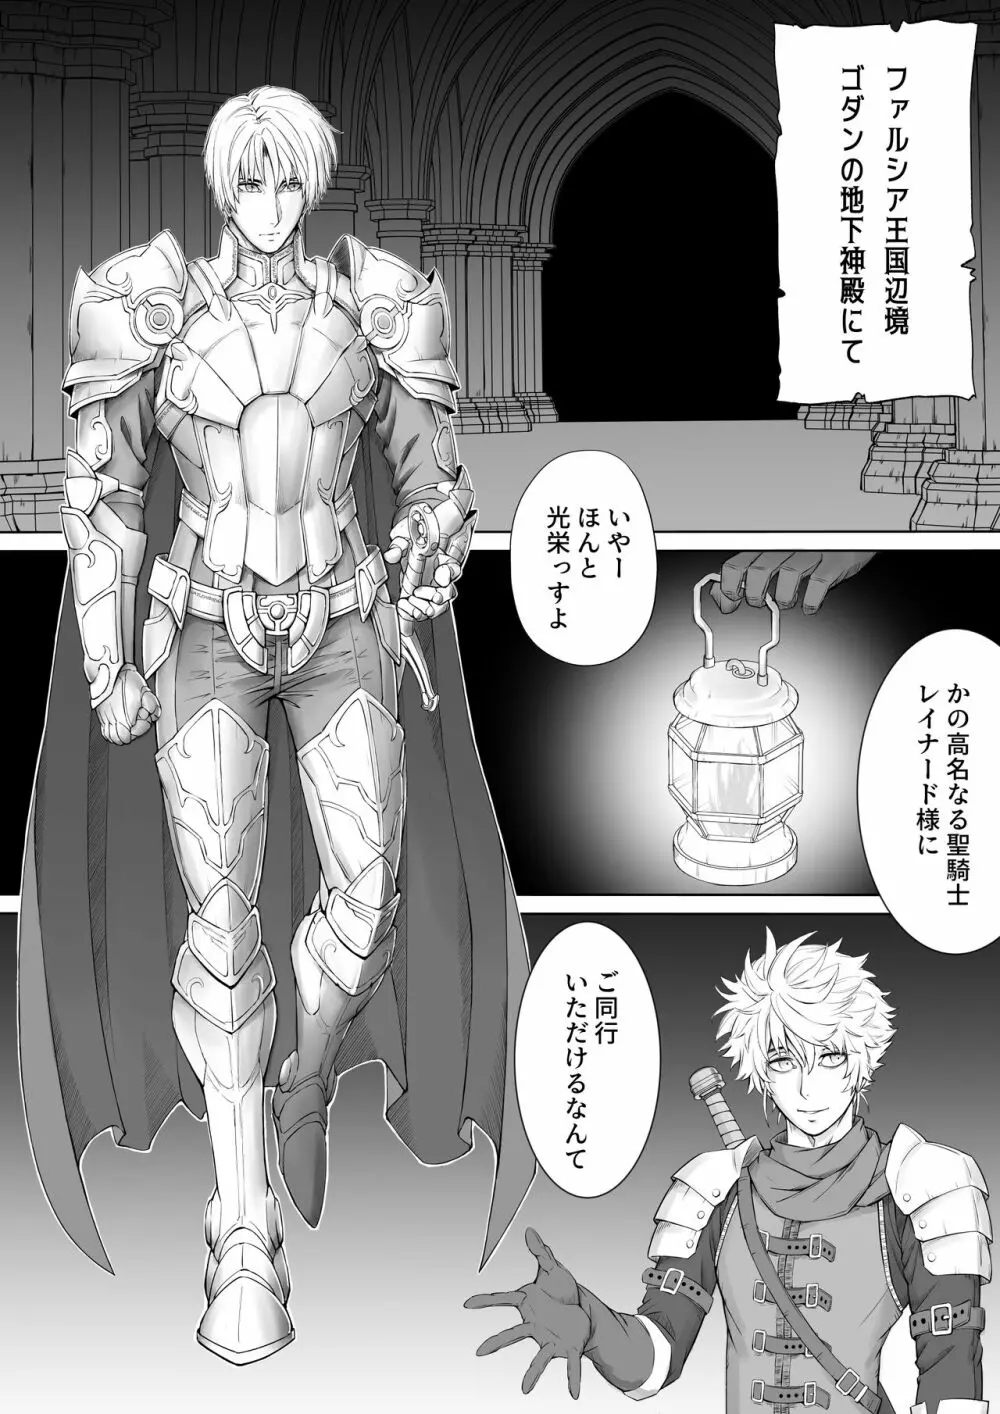 Knight of Labyrinth / ナイト オブ ラビリンス - page3